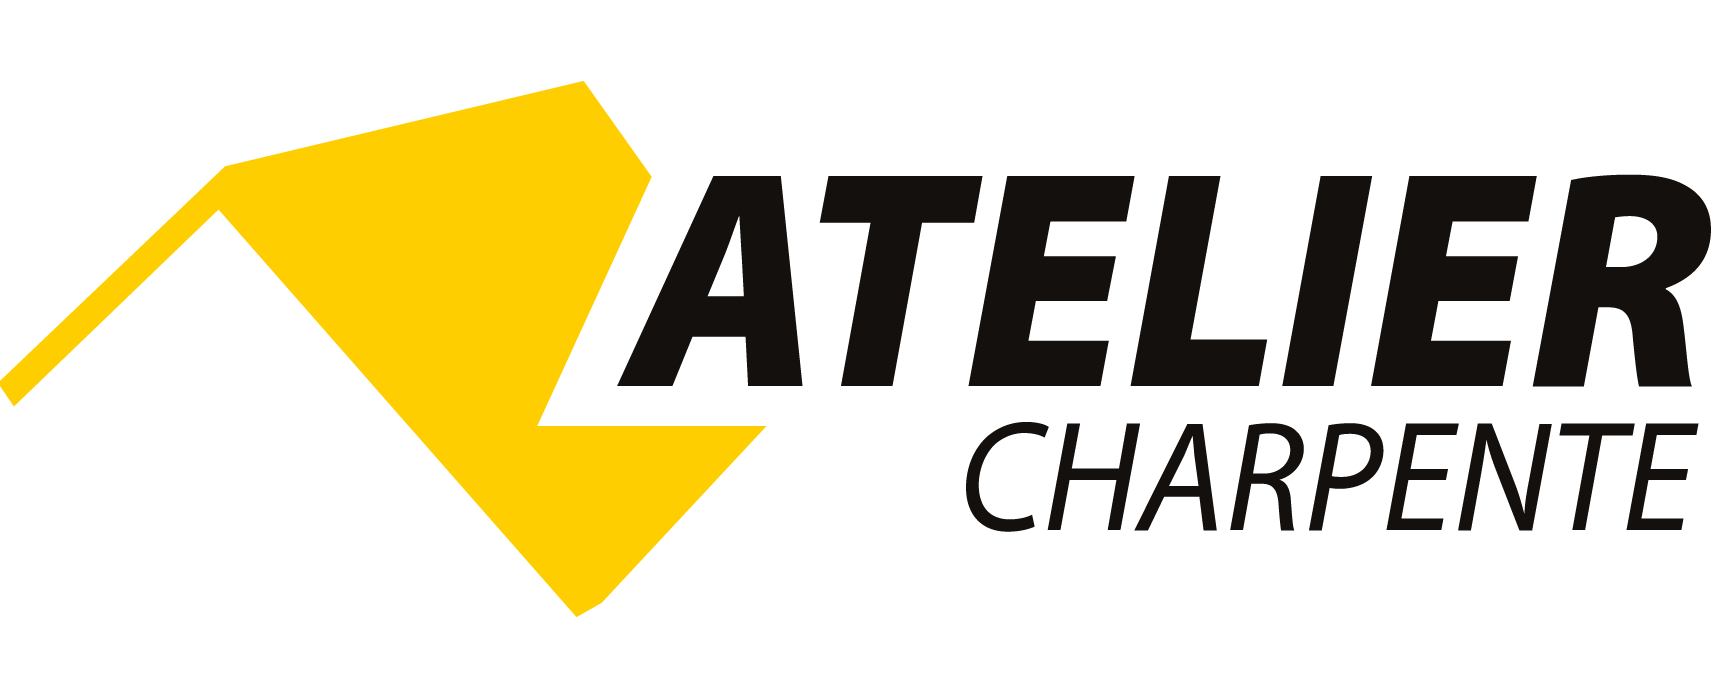 Atelier Charpente logo